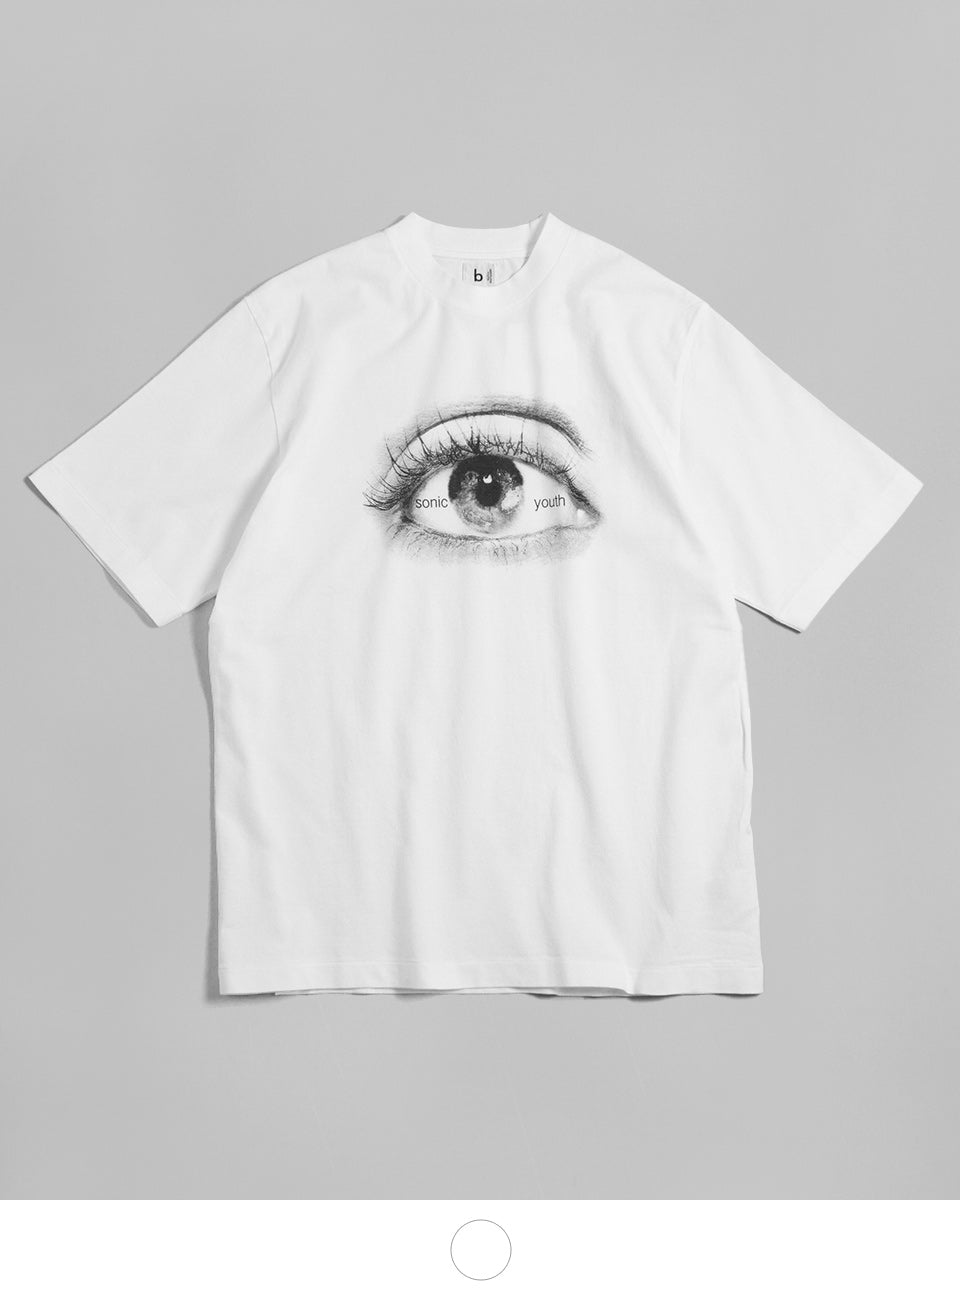 blurhms ROOTSTOCK ブラームス ルーツストックプリント Tシャツ eye Print Tee STANDARD【送料無料】正規取扱店 [★]